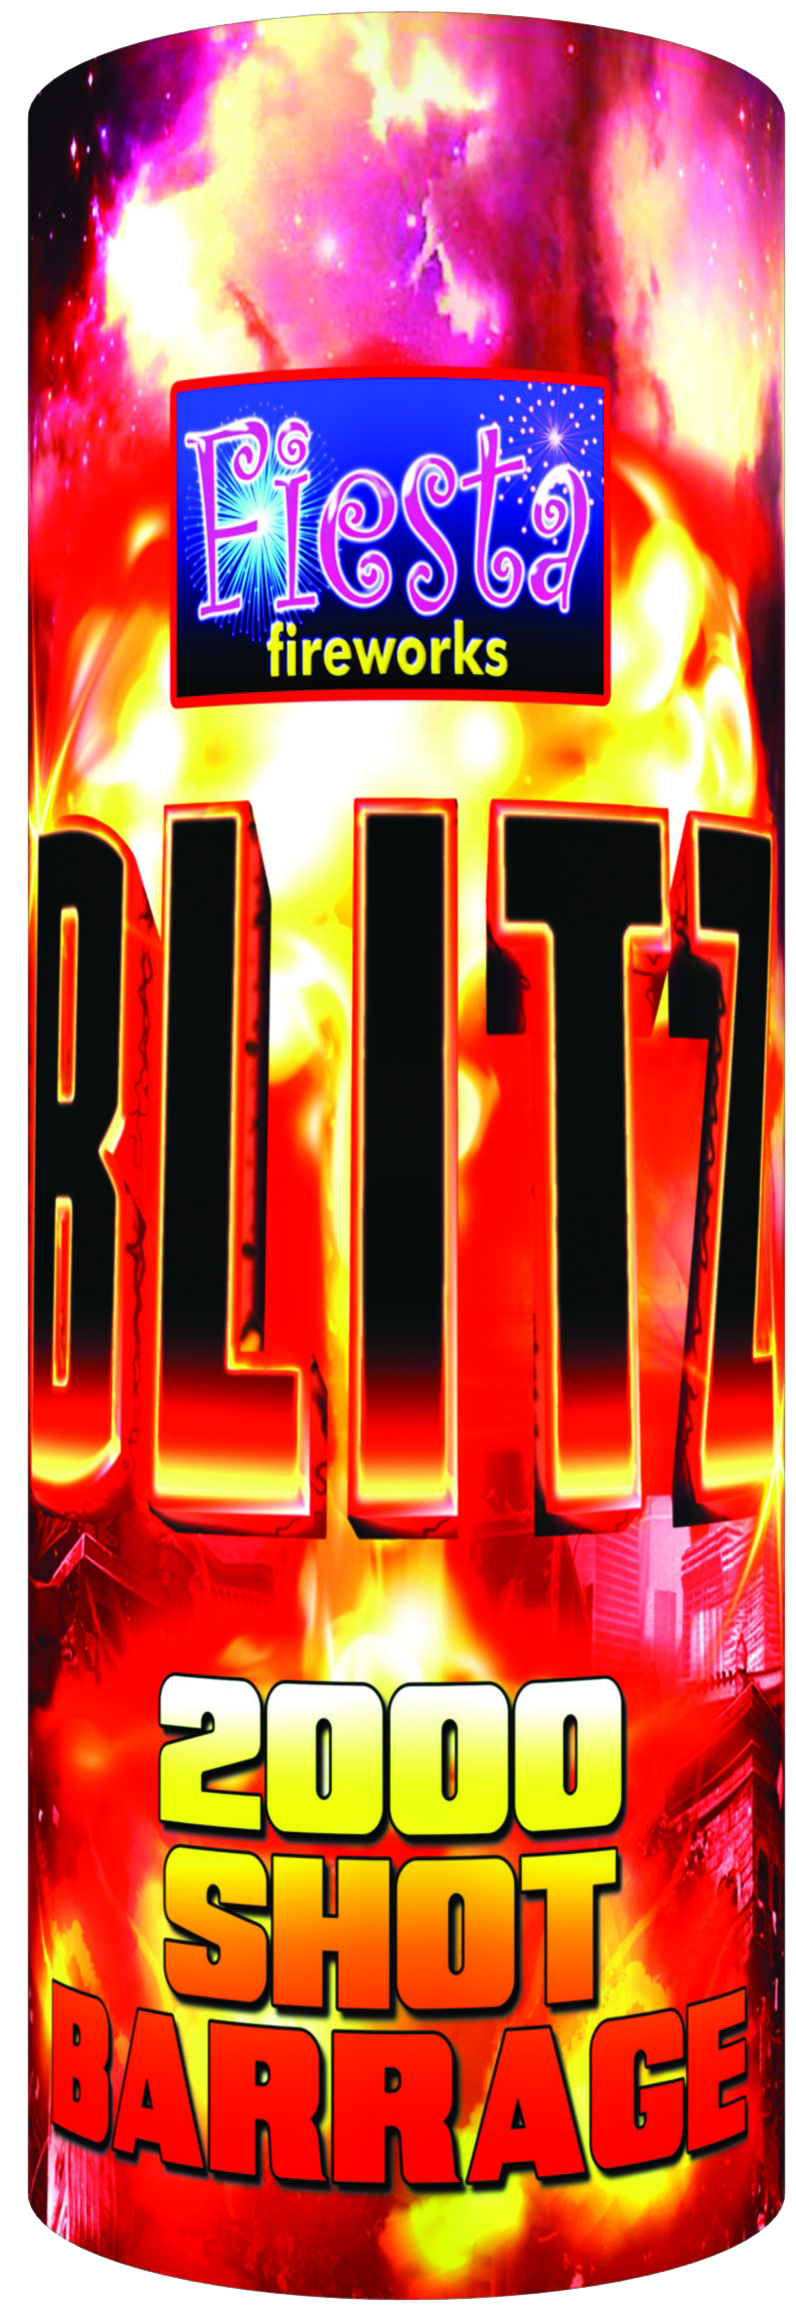 BLITZ (2000 SHOTS)